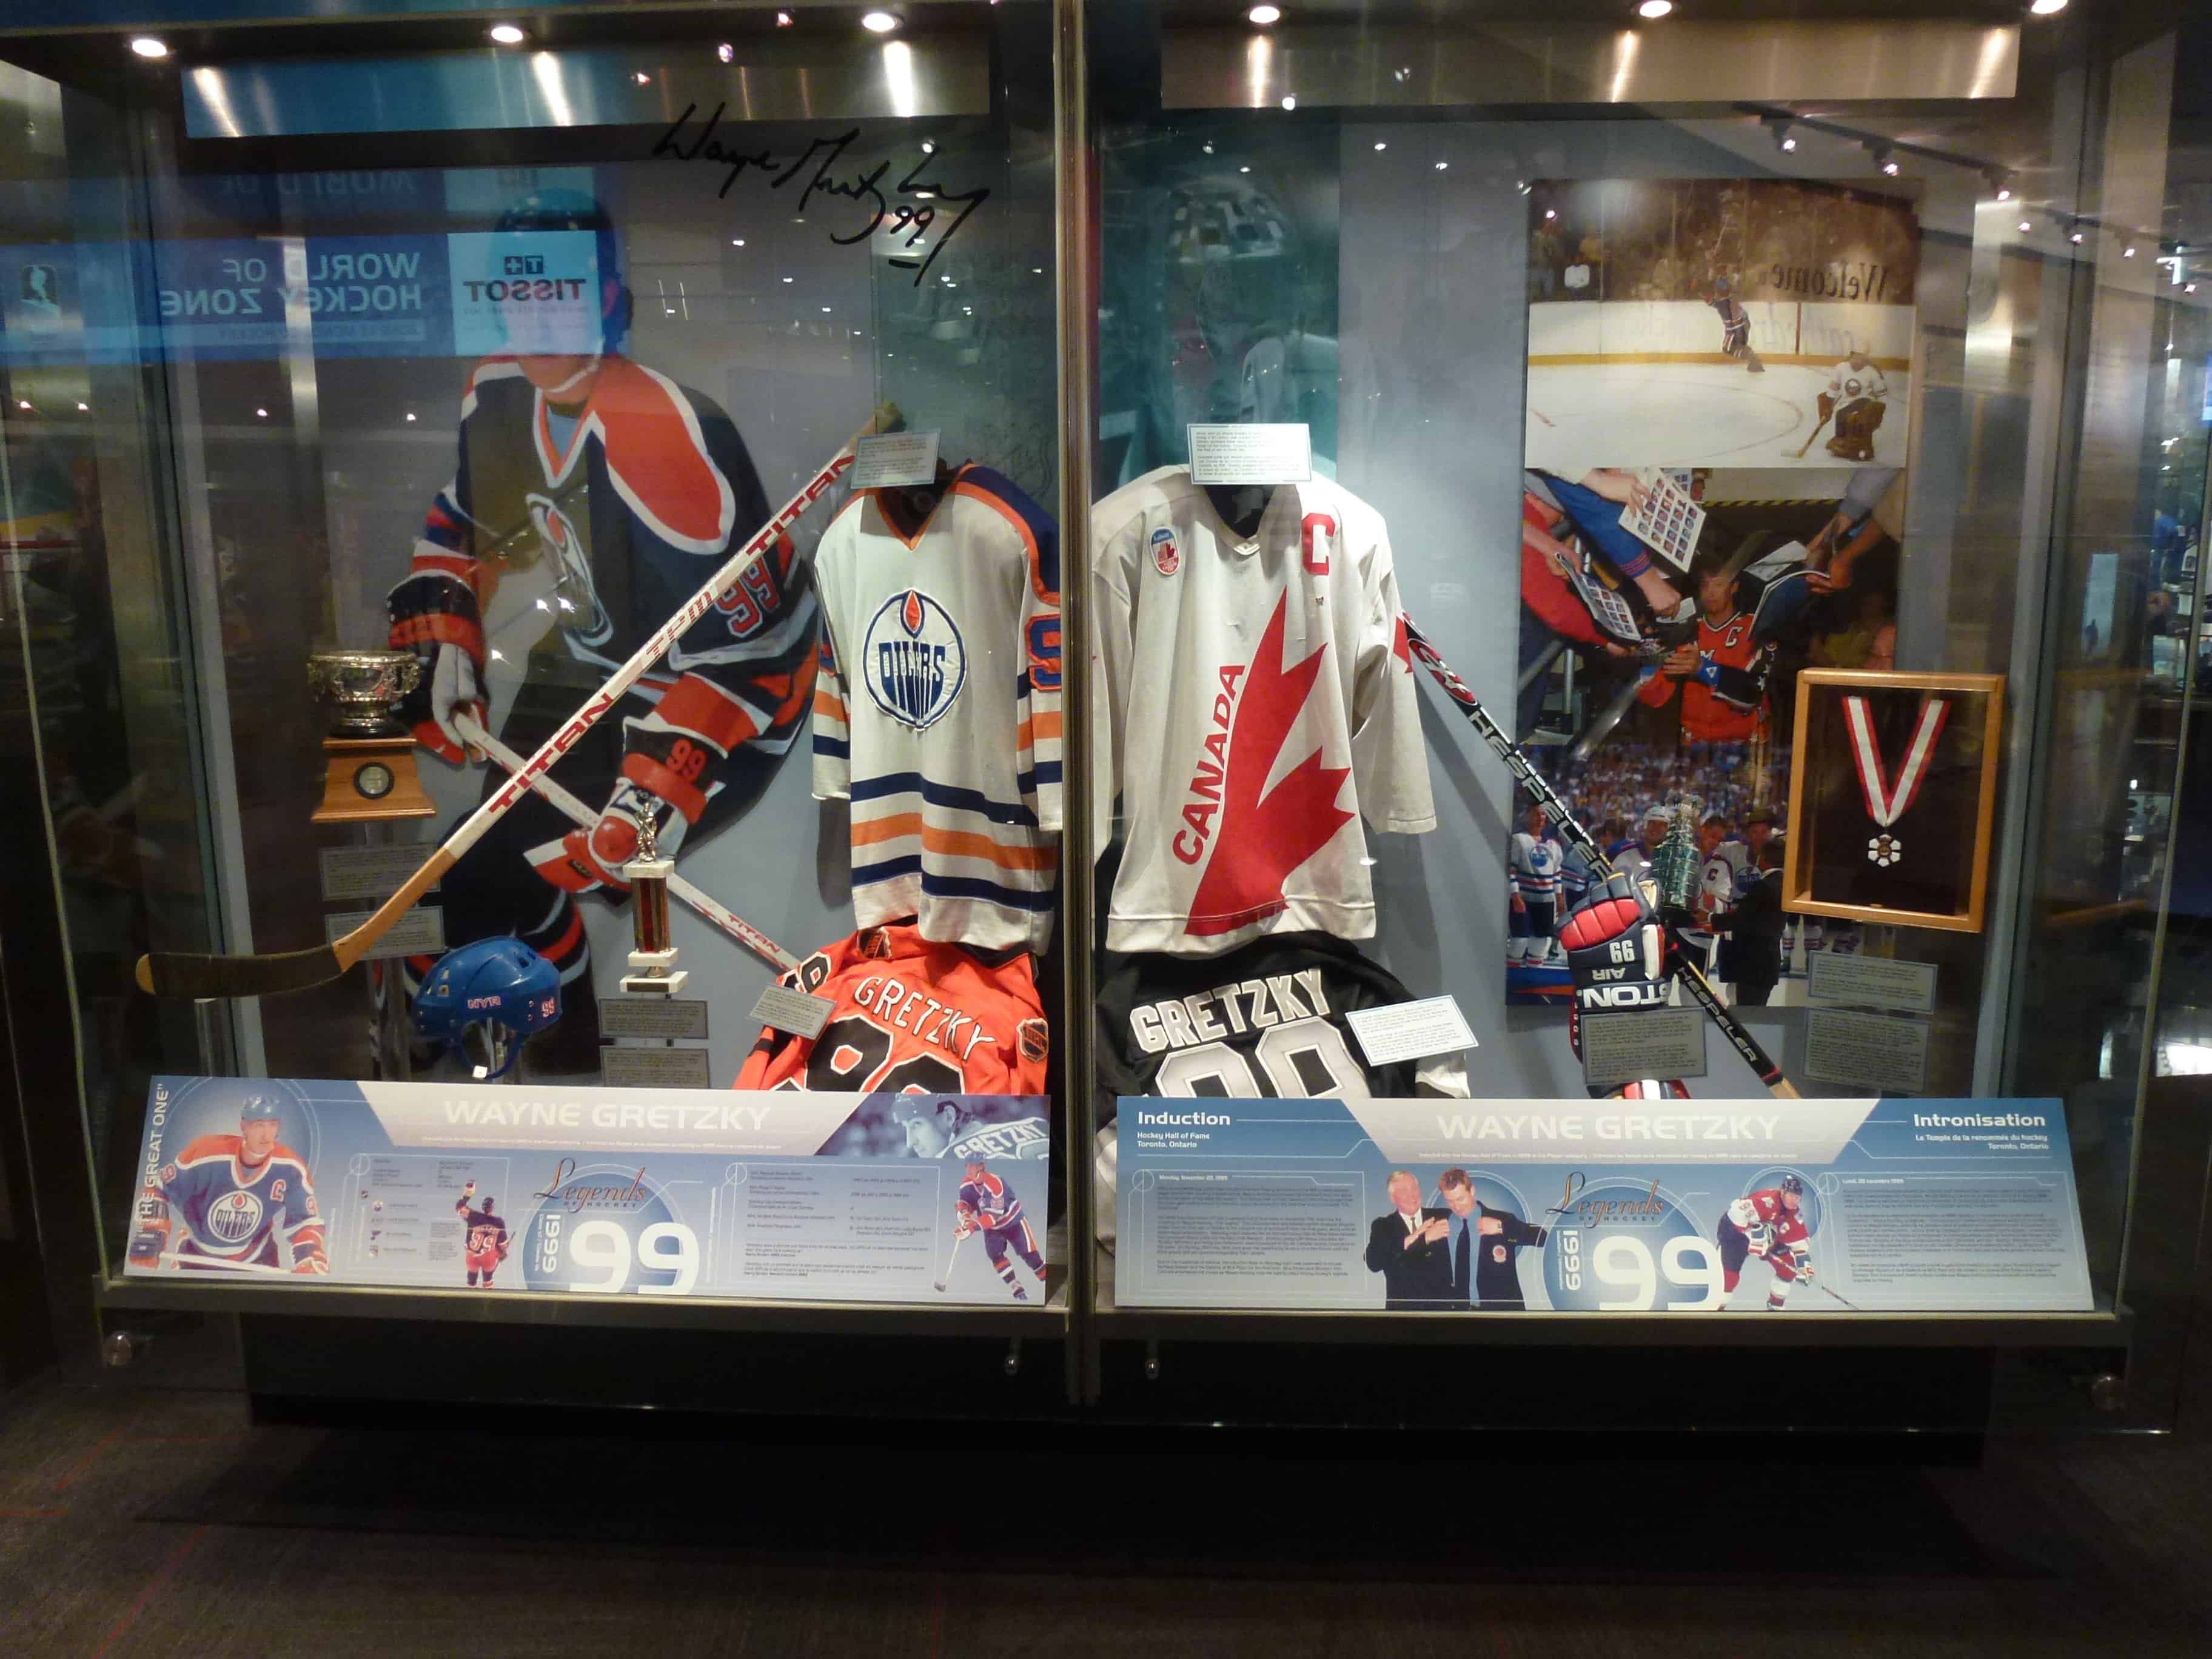 Wayne Gretzky display at the Hockey Hall of Fame in Toronto, Ontario, Canada